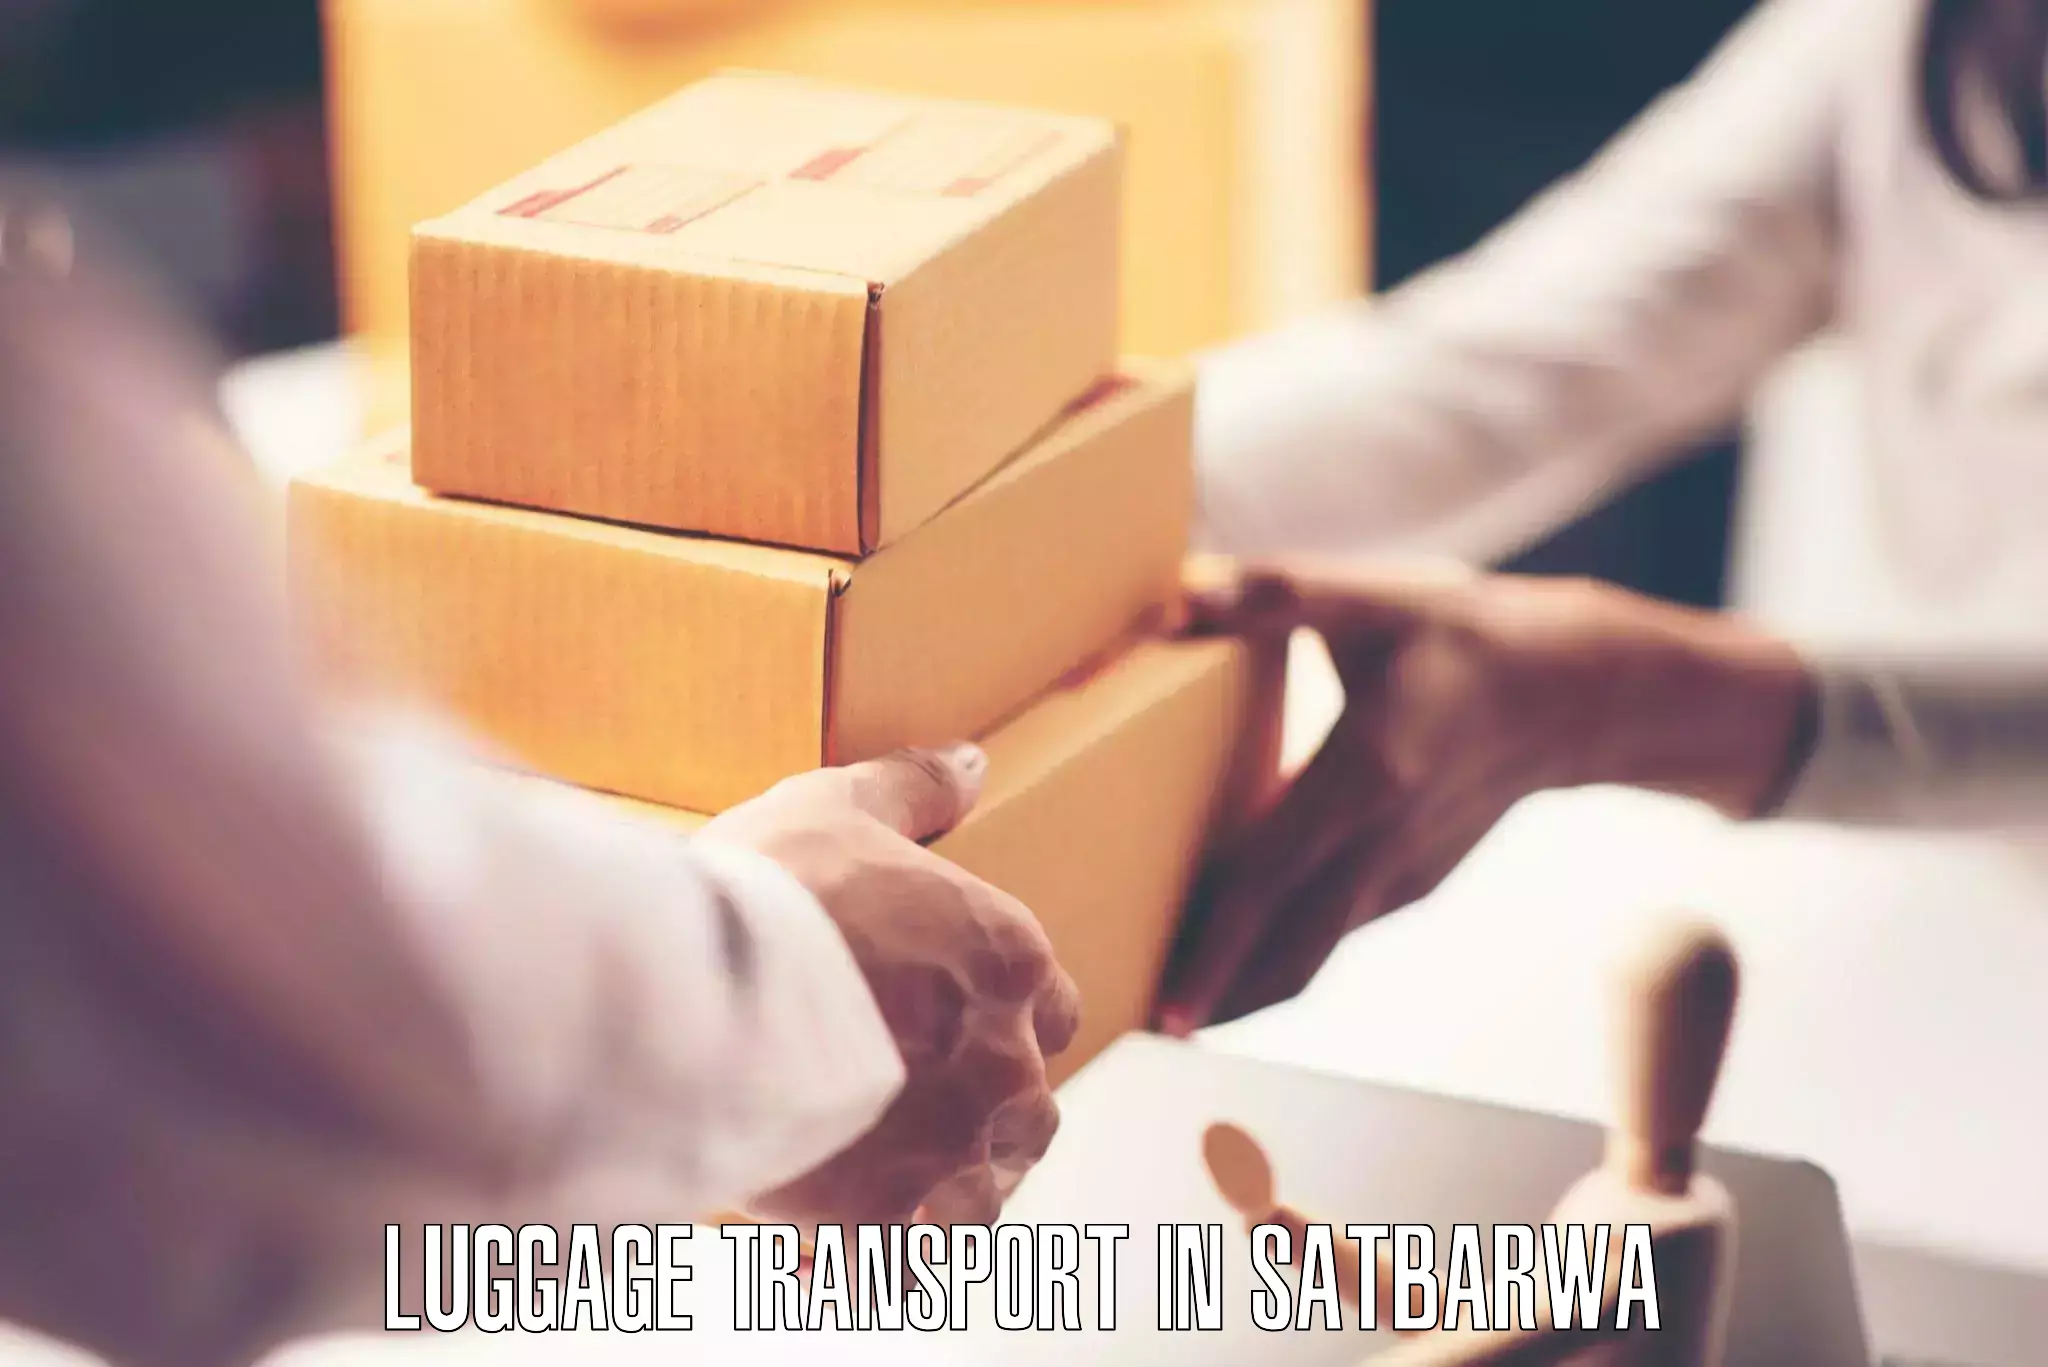 Regional luggage transport in Satbarwa